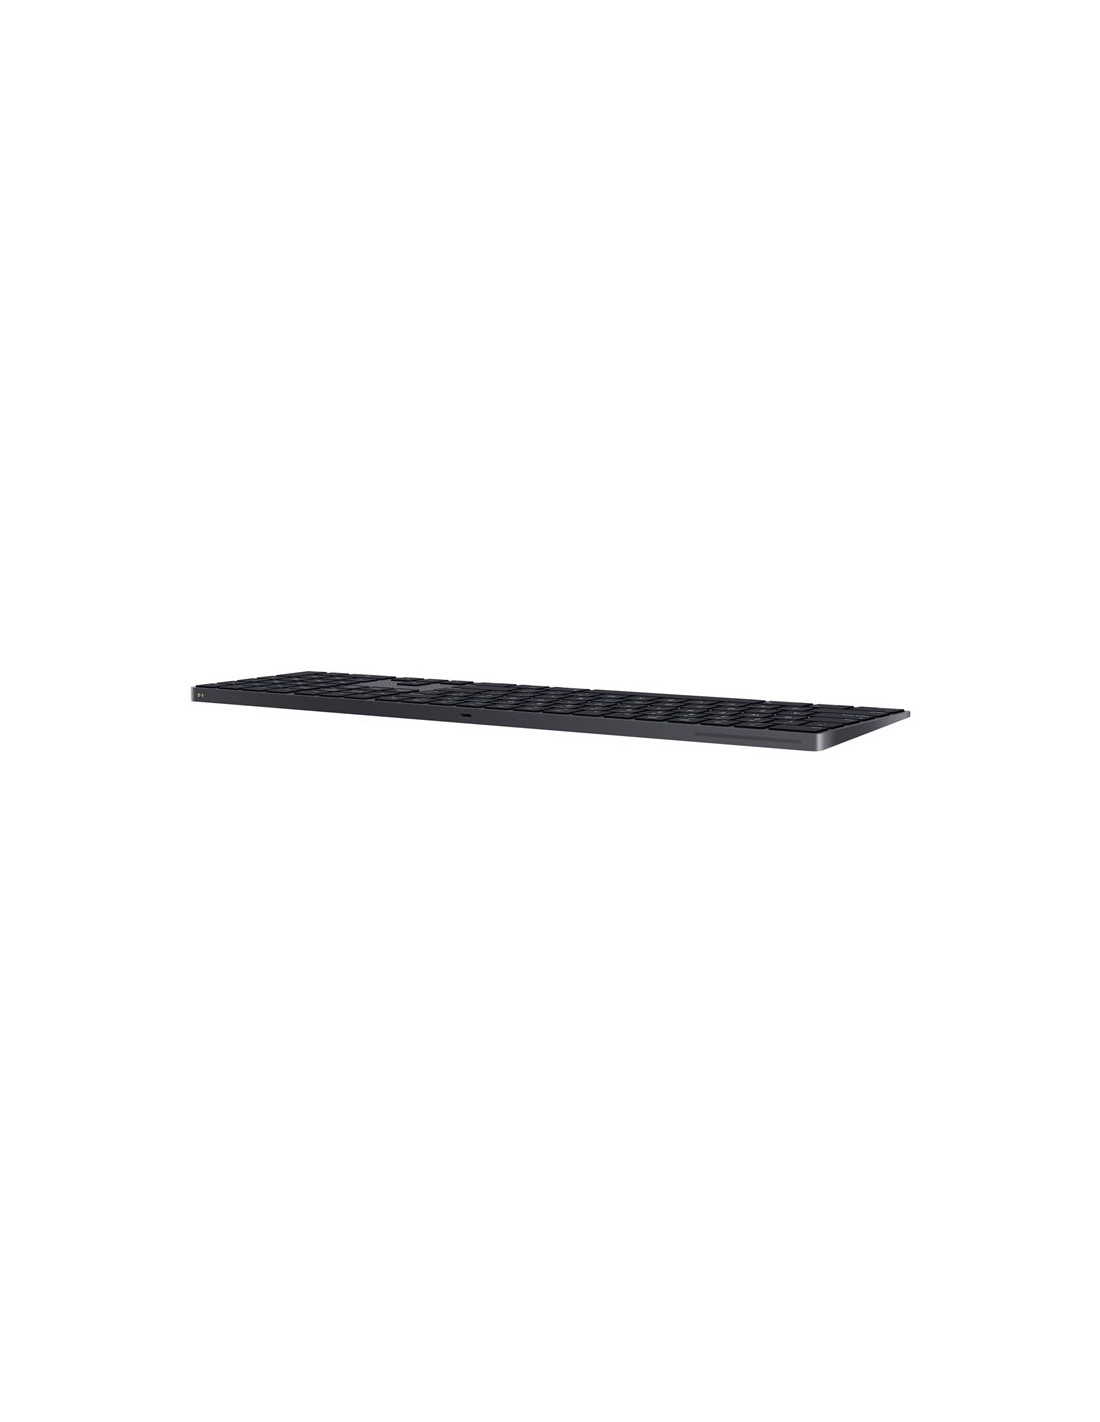 Teclado inalámbrico Apple Magic Keyboard - negro